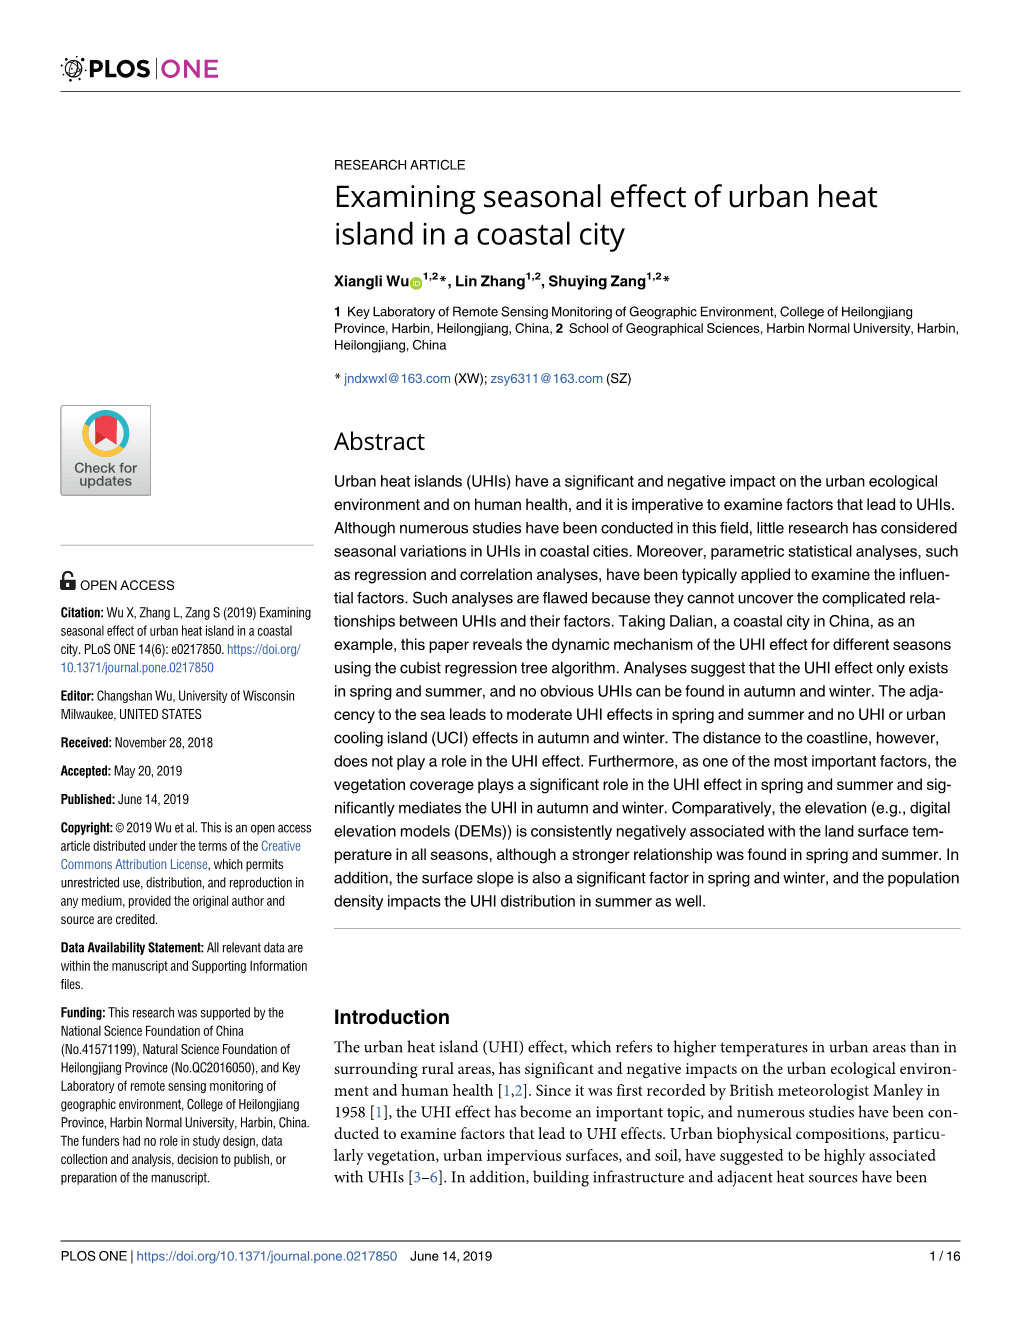 Examining Seasonal Effect of Urban Heat Island in a Coastal City